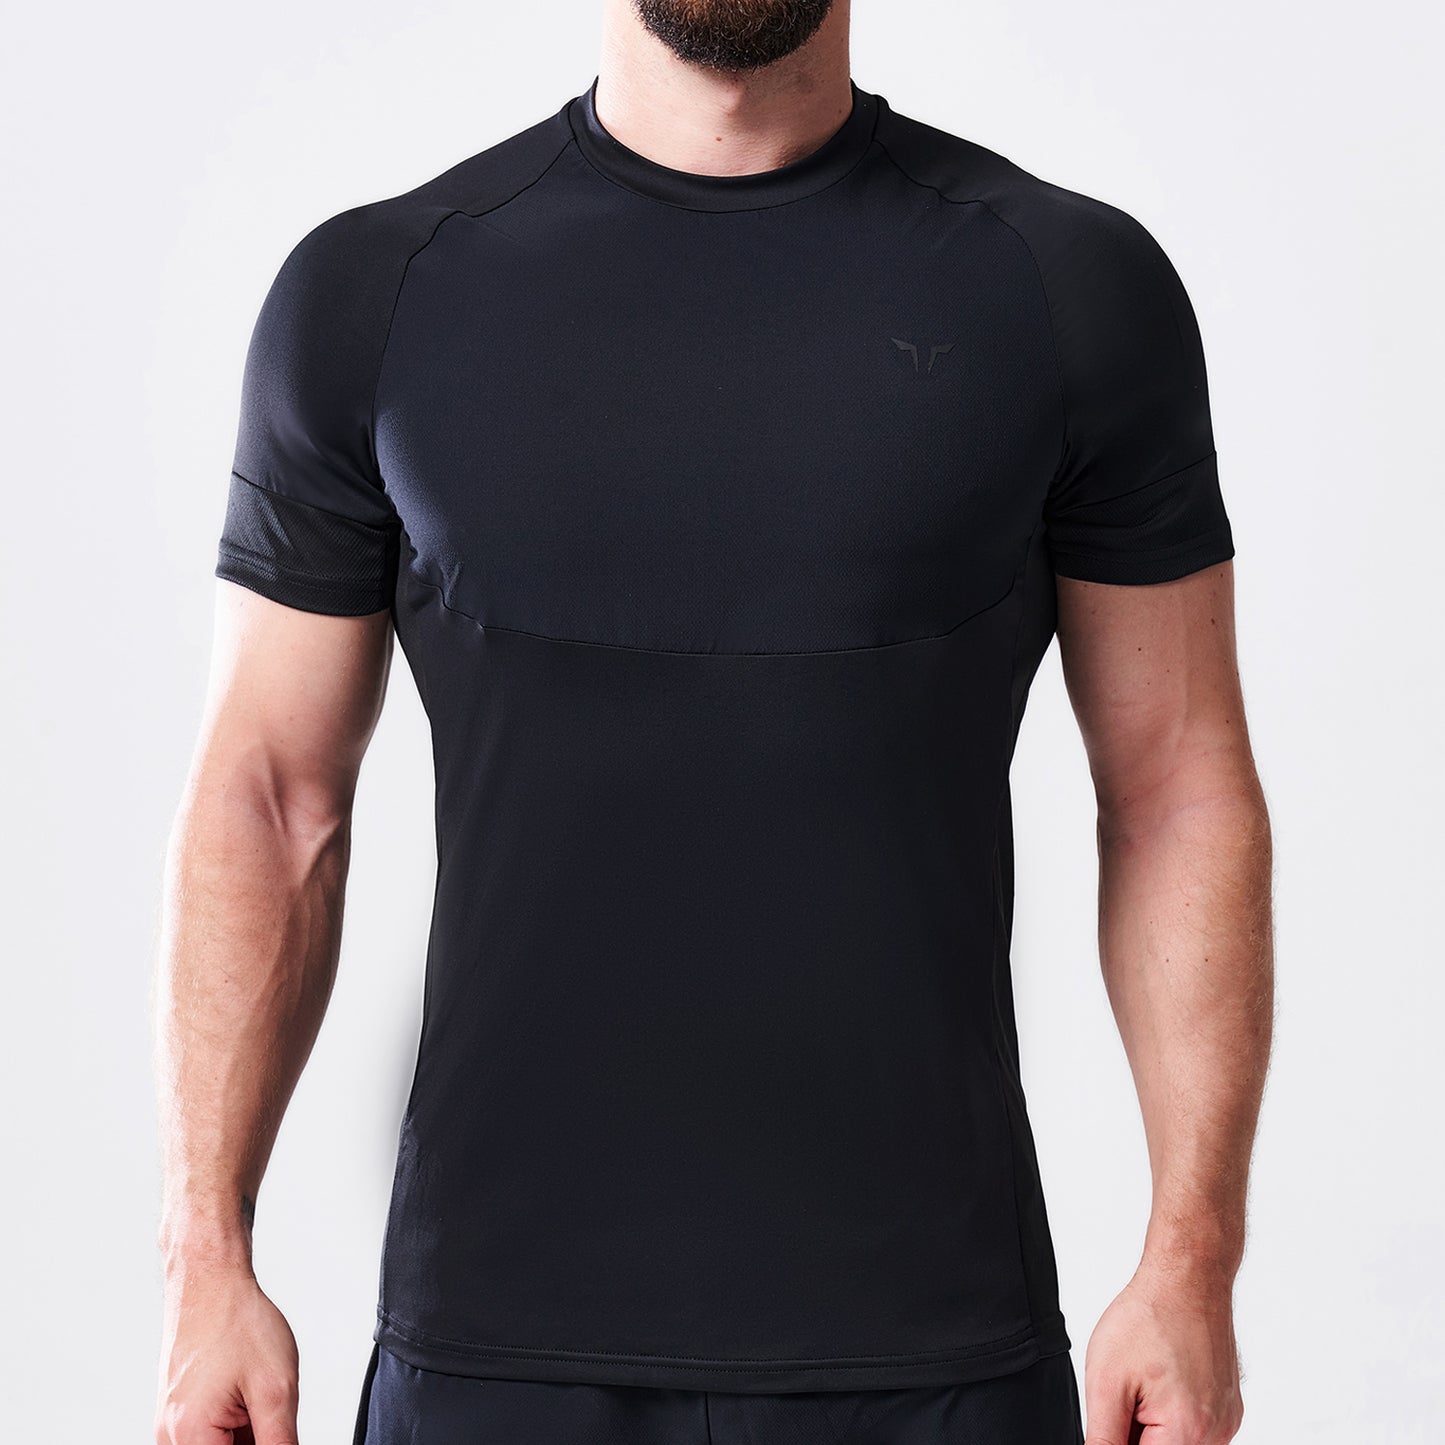 squatwolf-gym-wear-lab360-impact-tee-black-workout-shirts-for-men